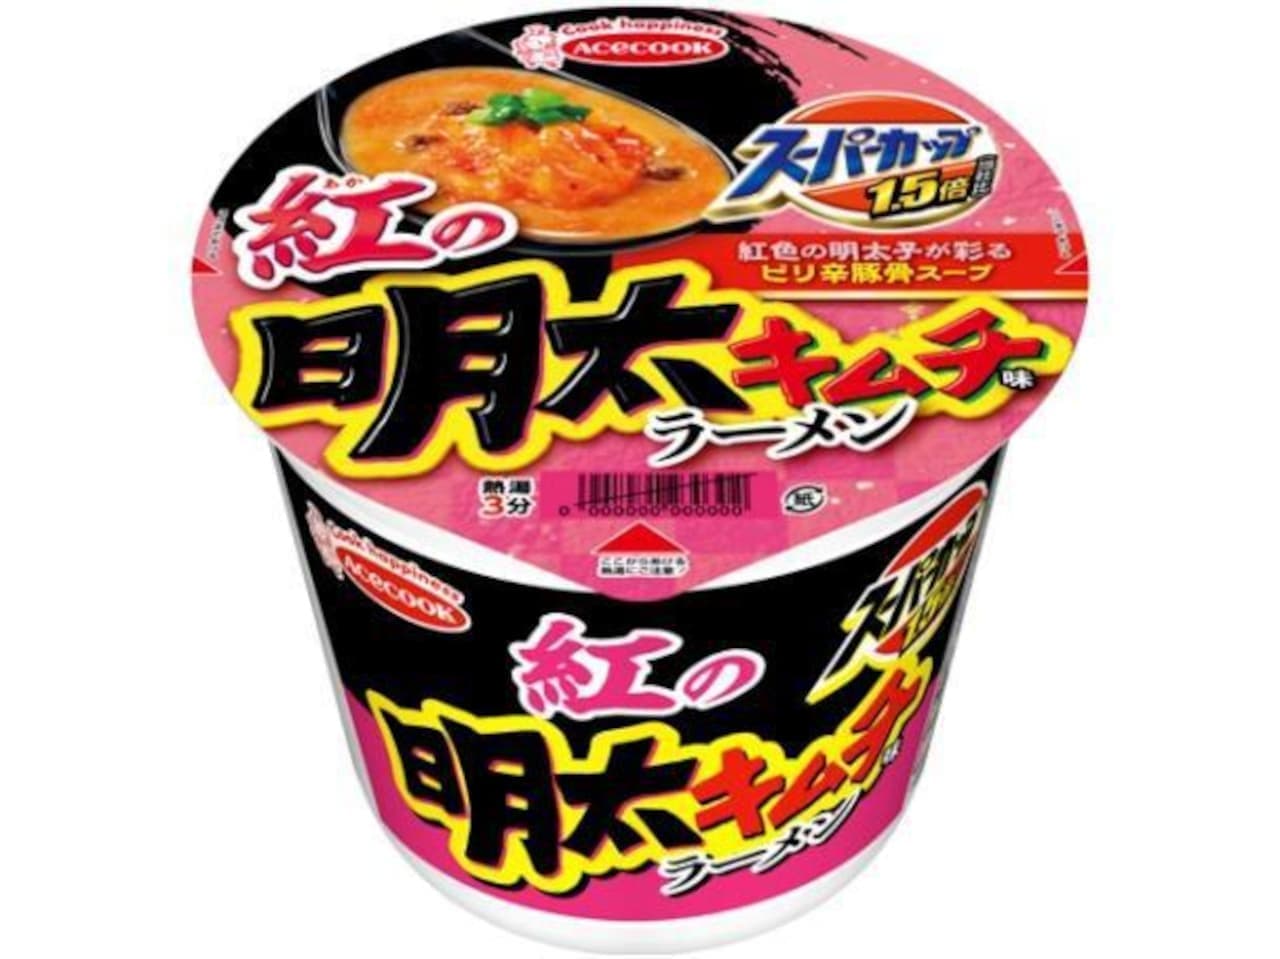 Acecock "Super Cup 1.5x Red Meita Kimchi Flavored Ramen" "Super Cup 1.5x Gold Beef Dashi Kimchi Udon"